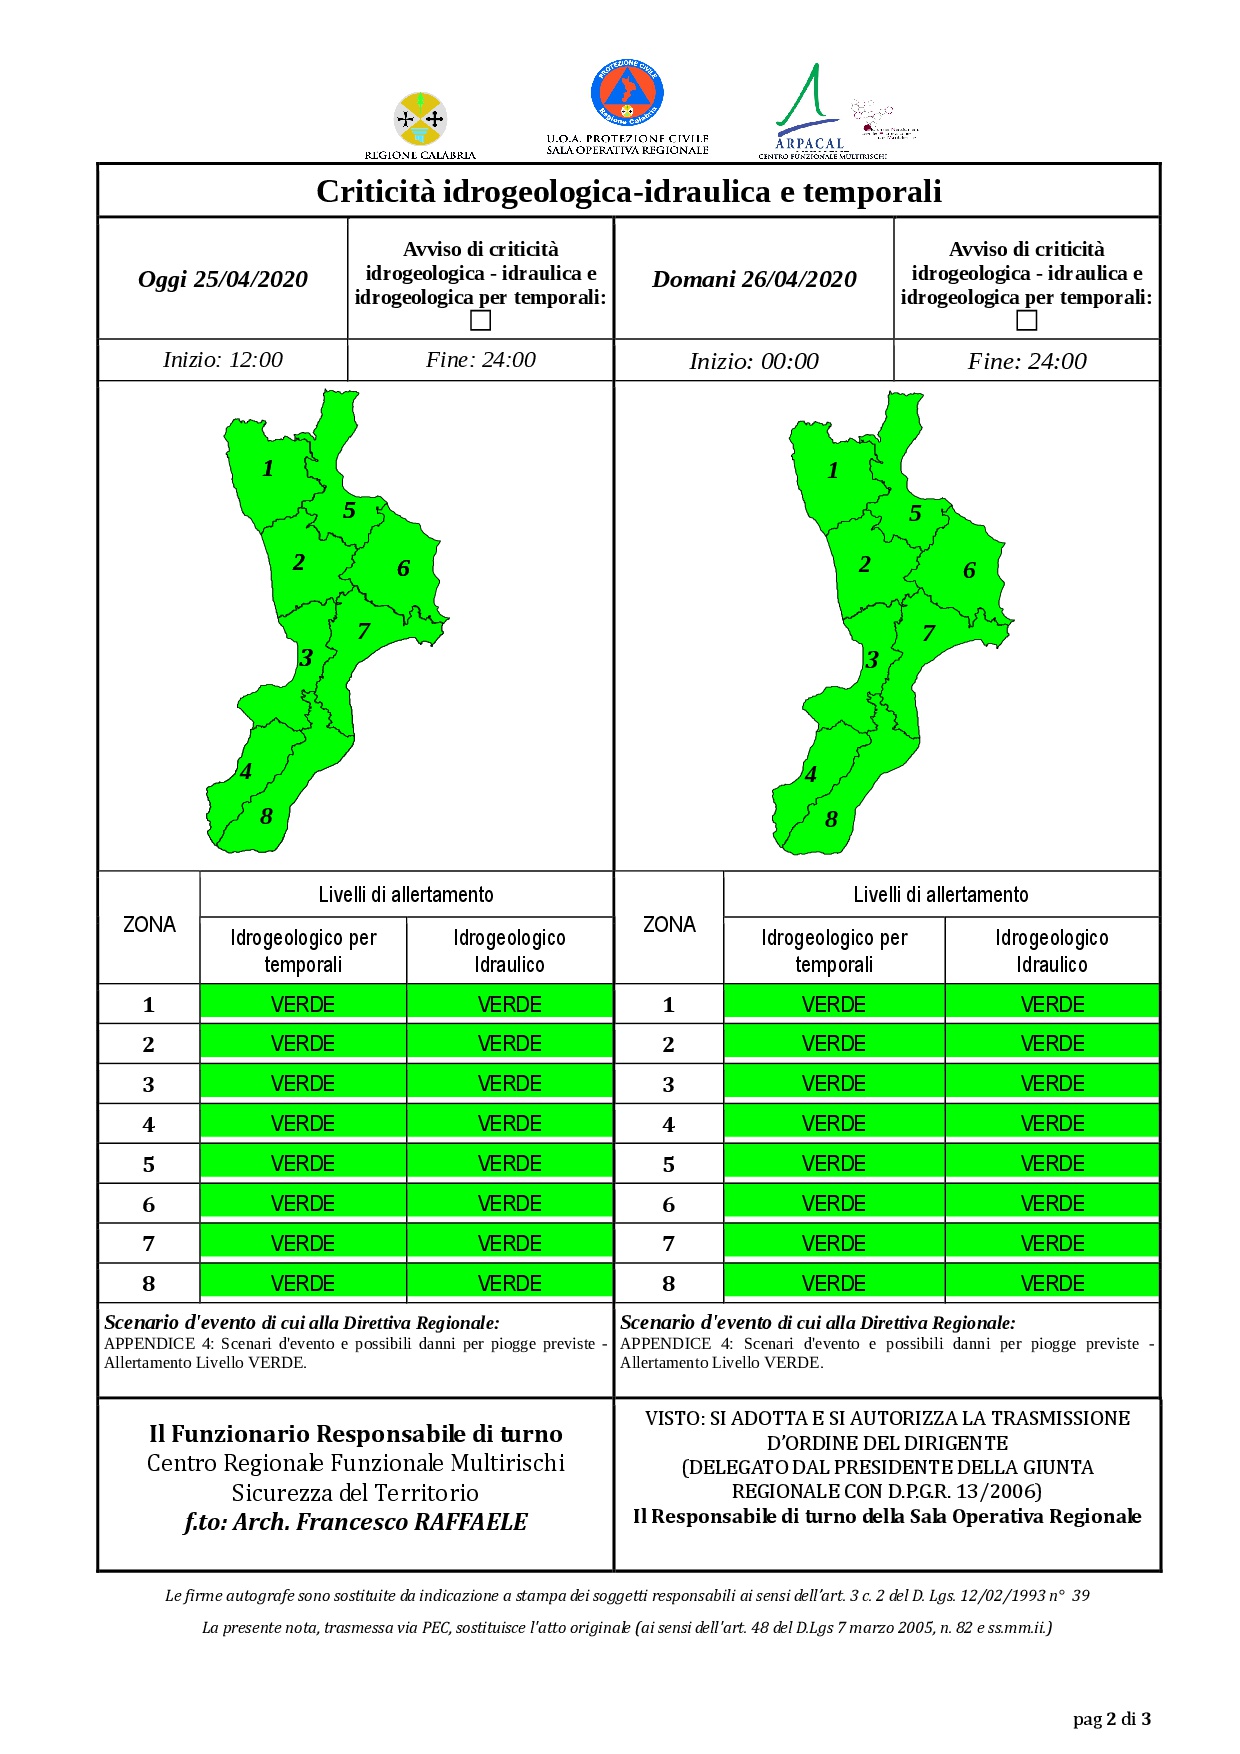 Criticità idrogeologica-idraulica e temporali in Calabria 25-04-2020